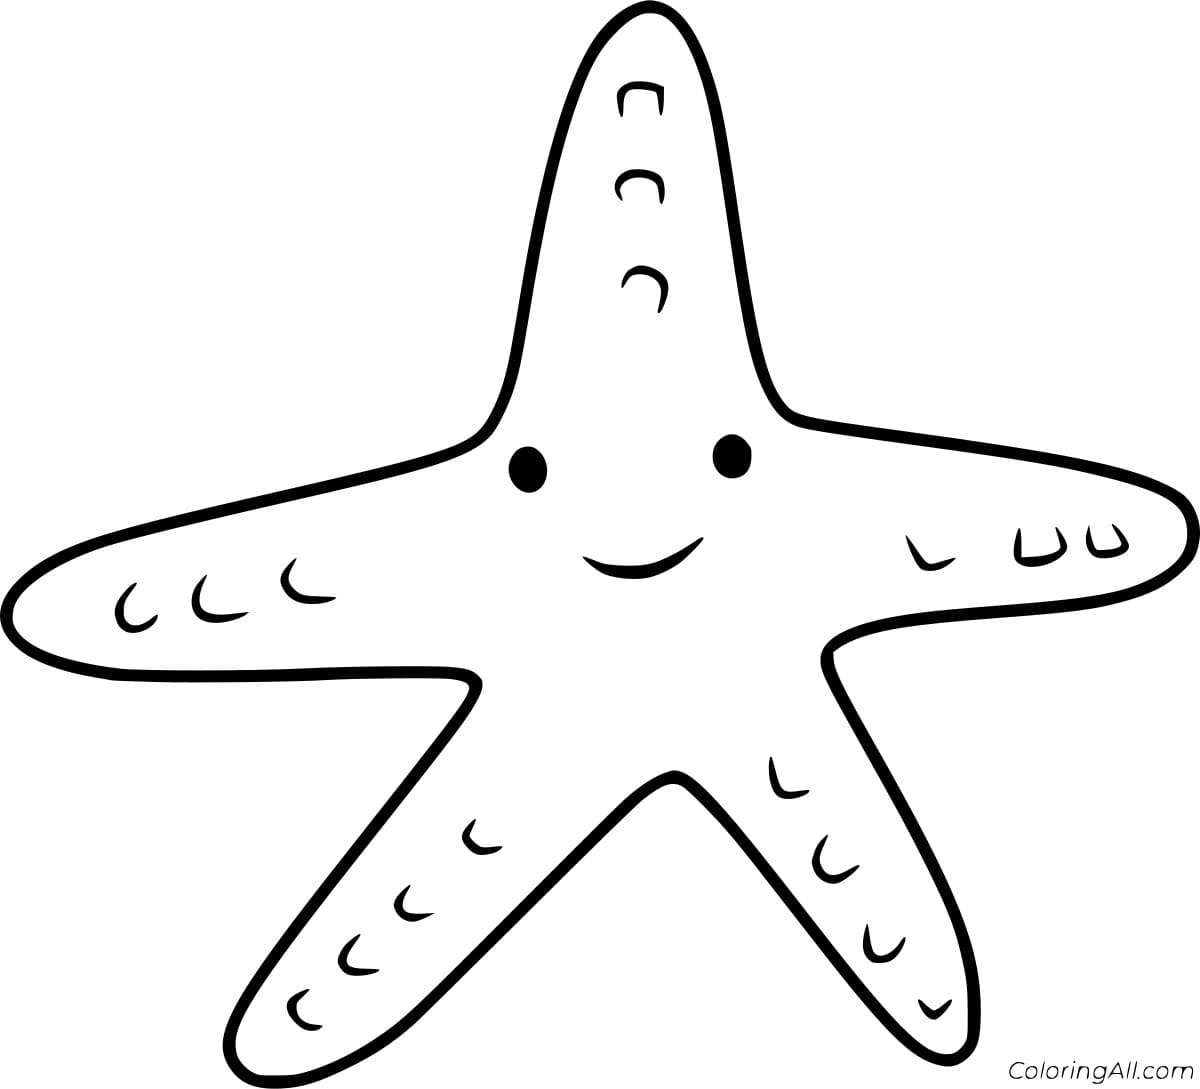 Easy Cute Starfish Image